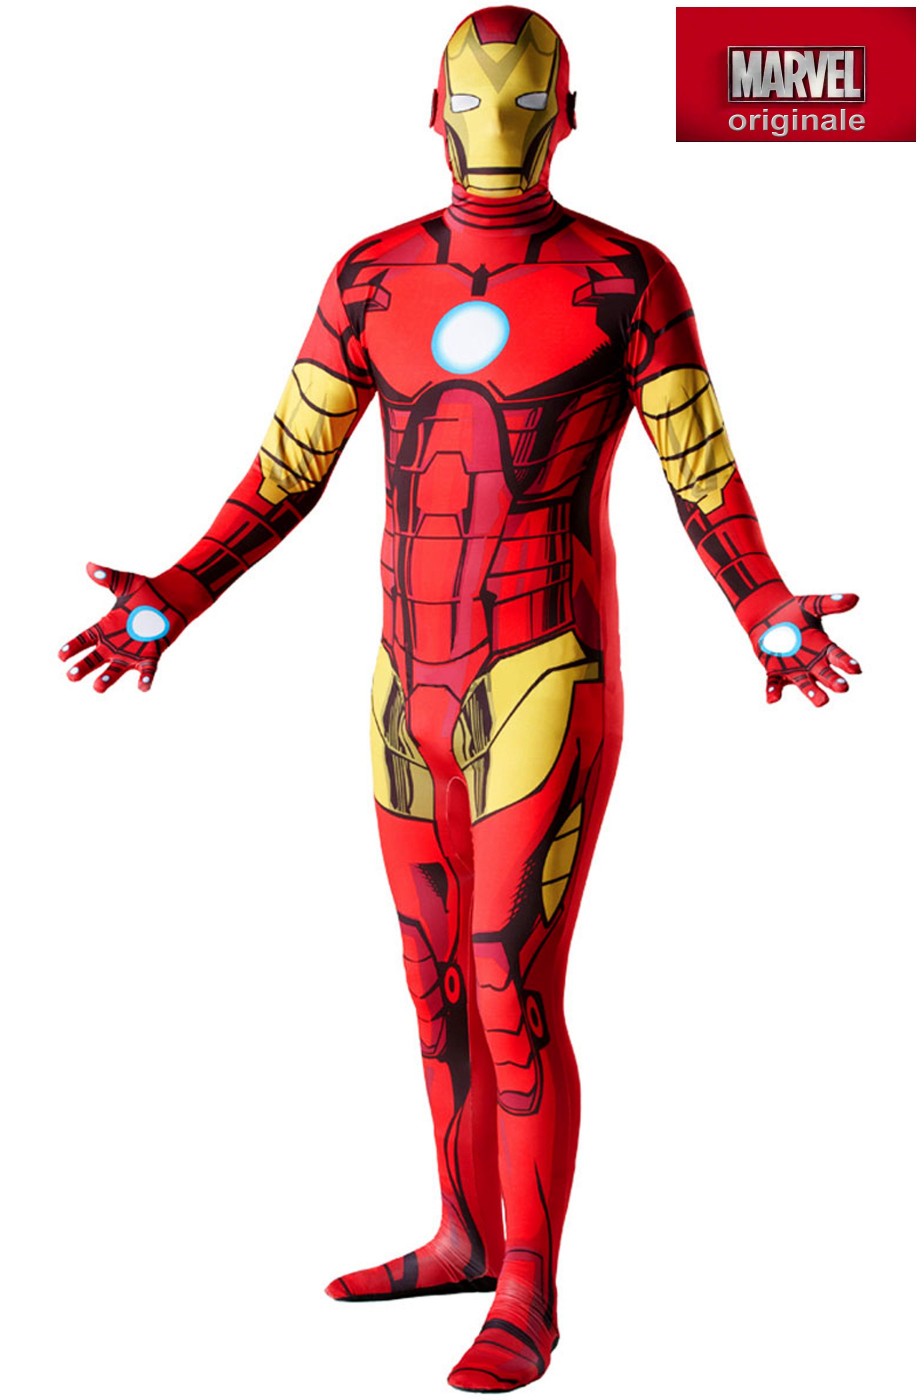 Costume Iron man 2nd skin.Tuta aderente.Si beve attraverso.